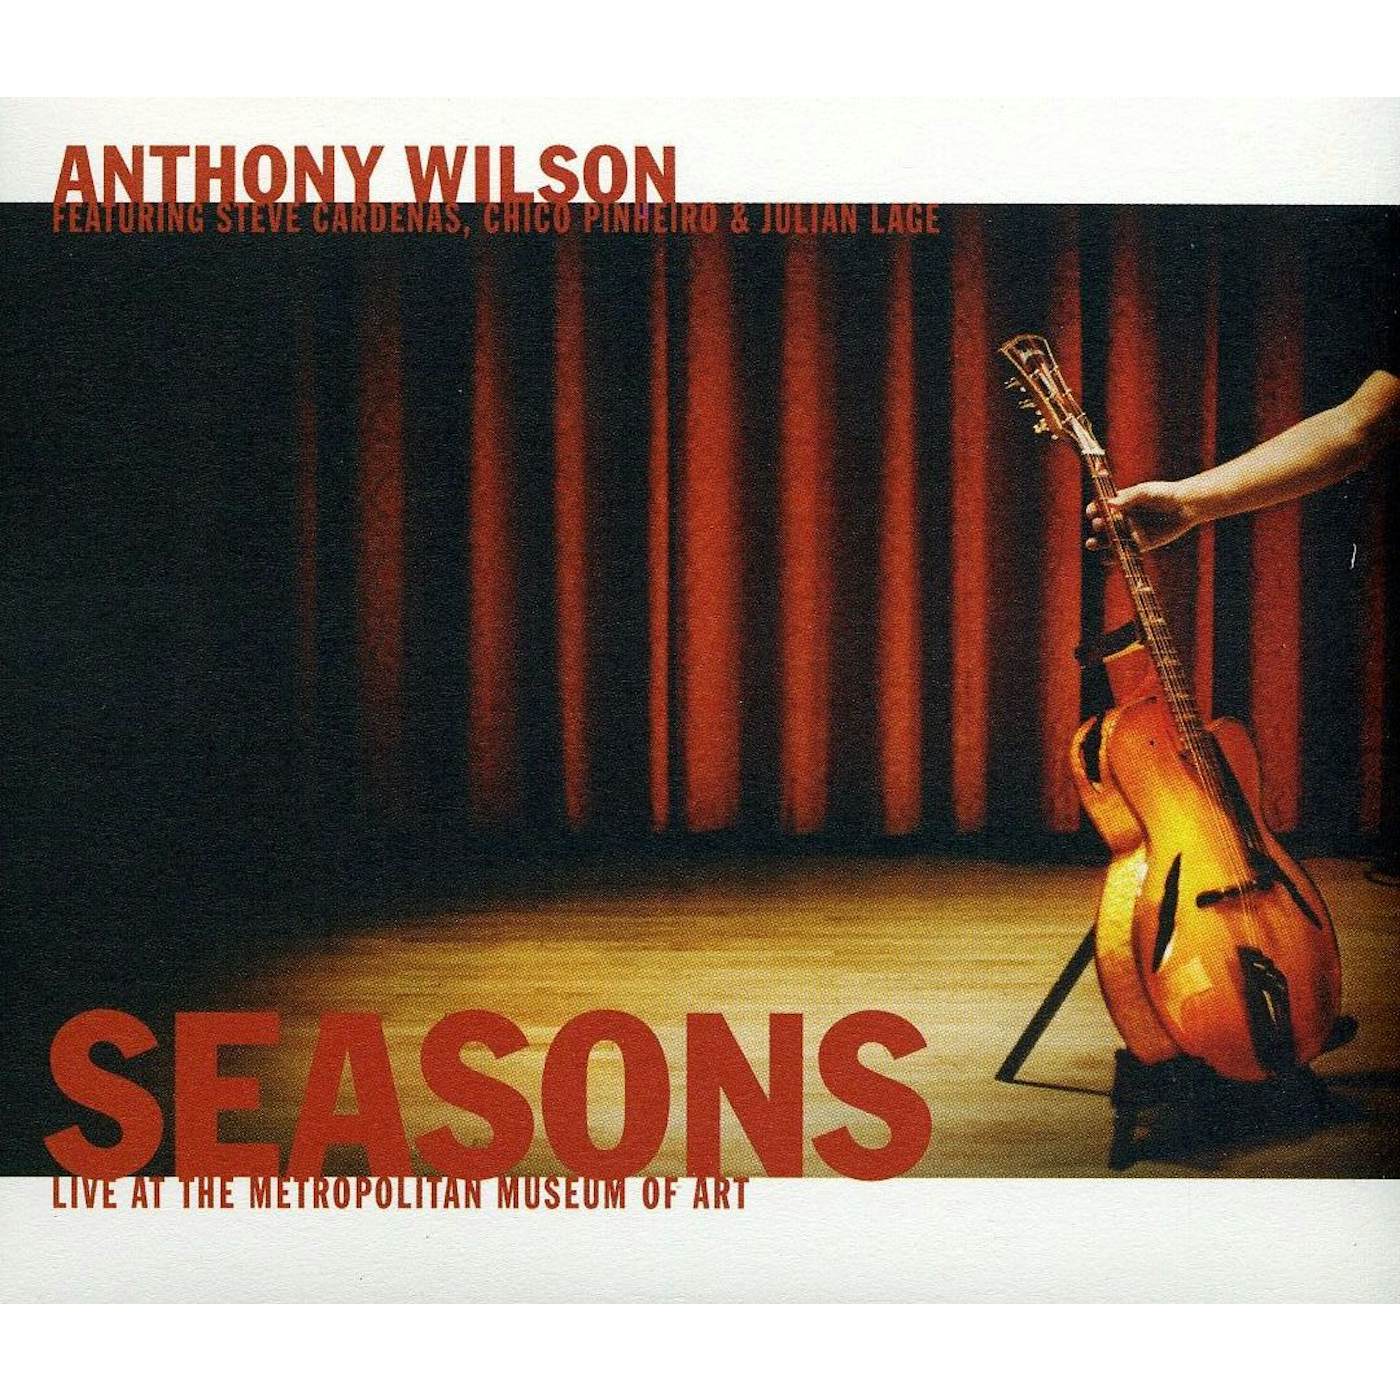 Anthony Wilson SEASONS: LIVE AT THE METROPOLITAN MUSEUM OF ART CD